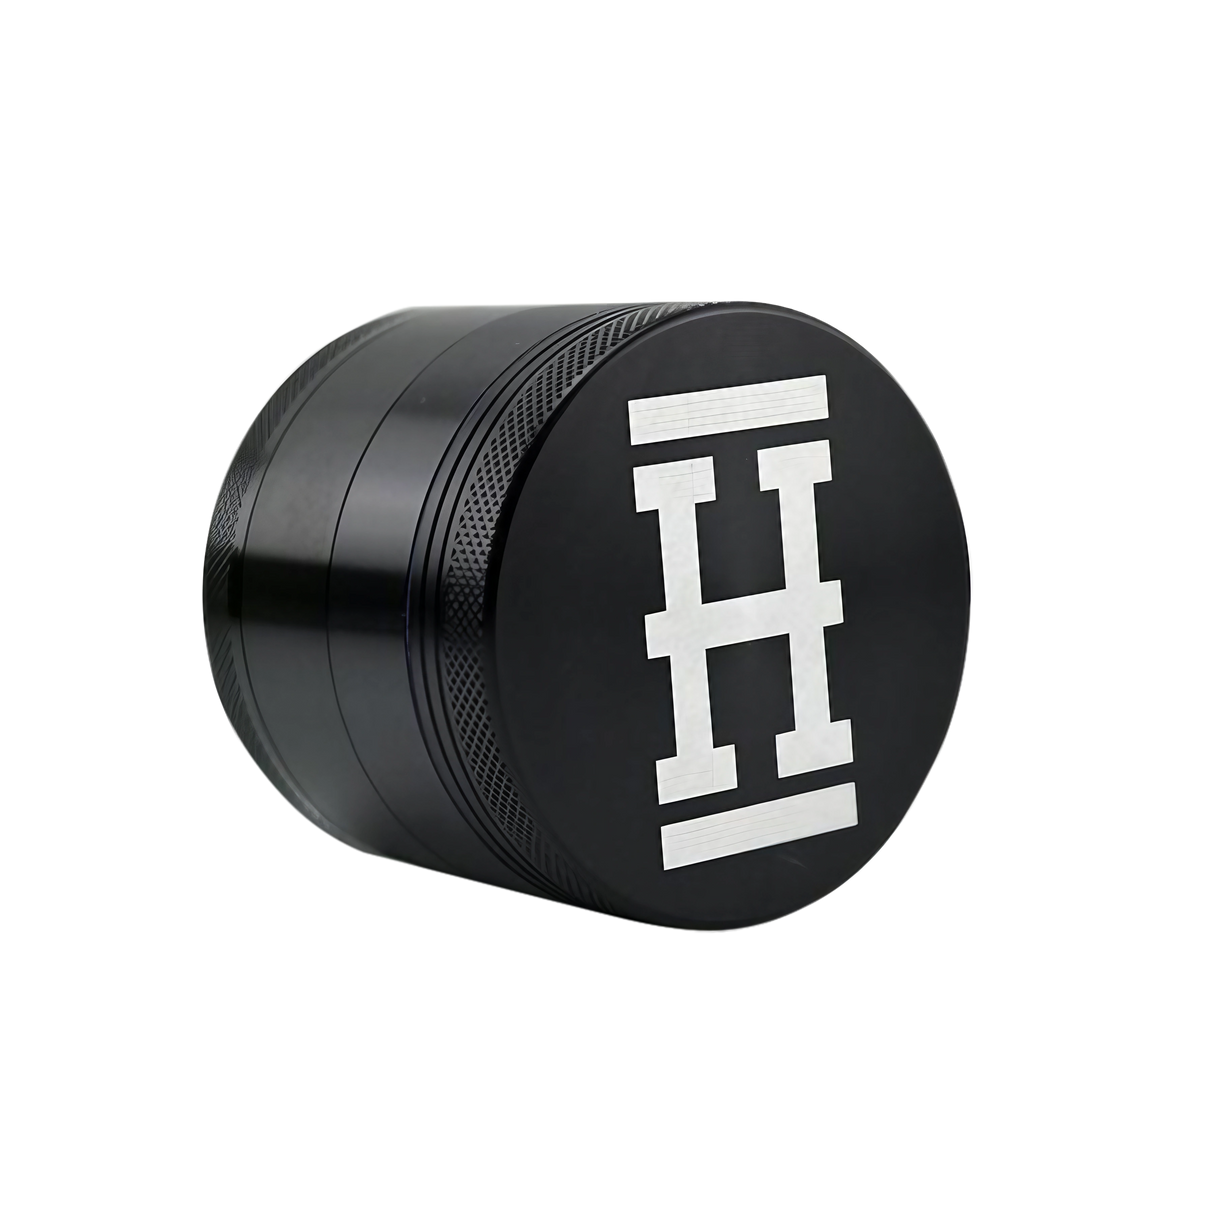 Hemper Aluminum Grinder 4 Piece in Black, 2.2" Size, Durable with Textured Grip - Side View